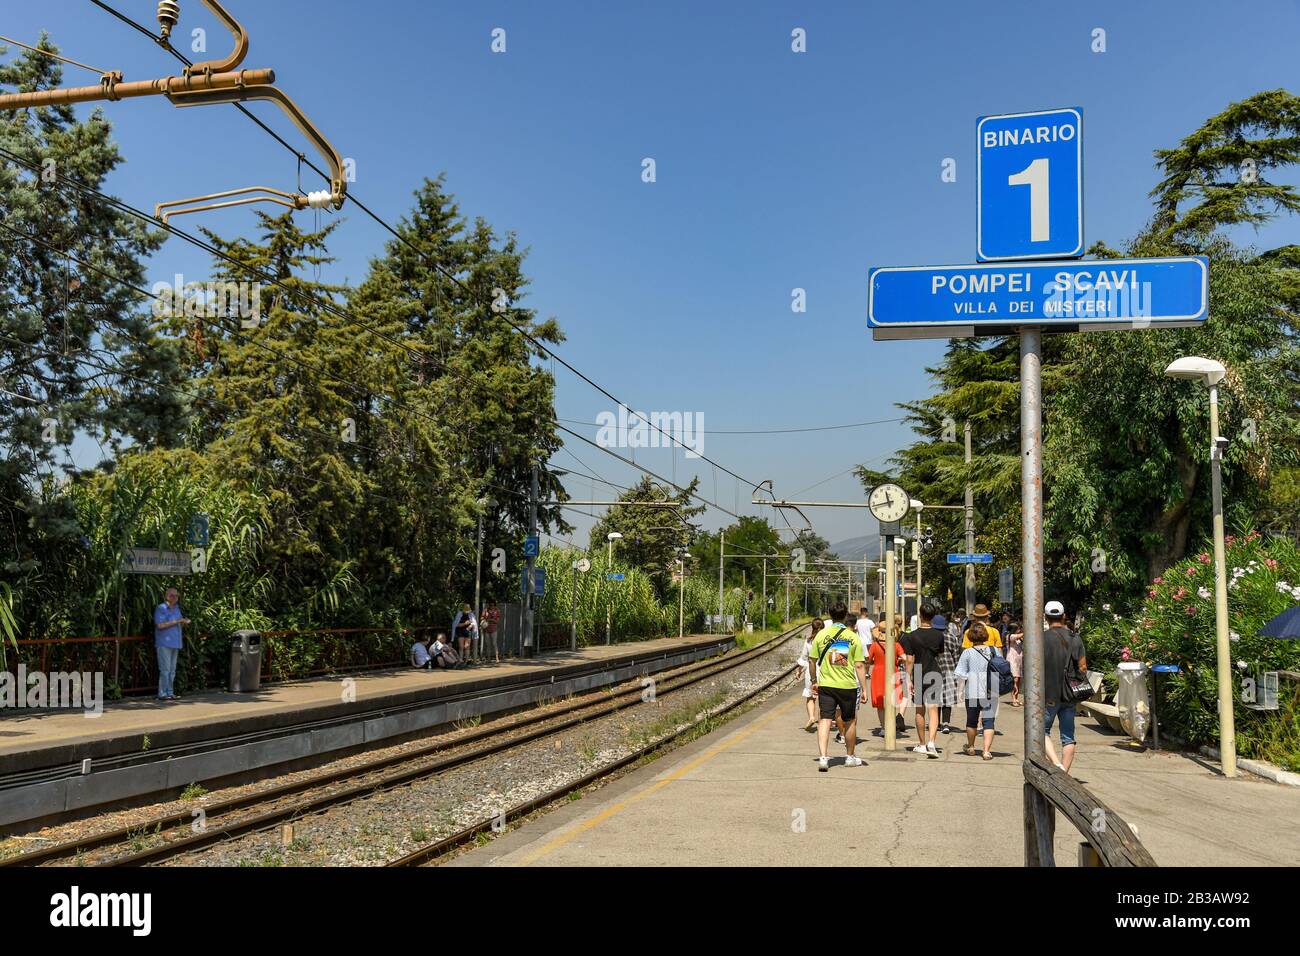 POMPEII, NEAR NAPLES, ITALY - AUGUST 2019: People on Platform 1 of Pompeii Scavi station waiting to catch a train to Sorrento Stock Photo